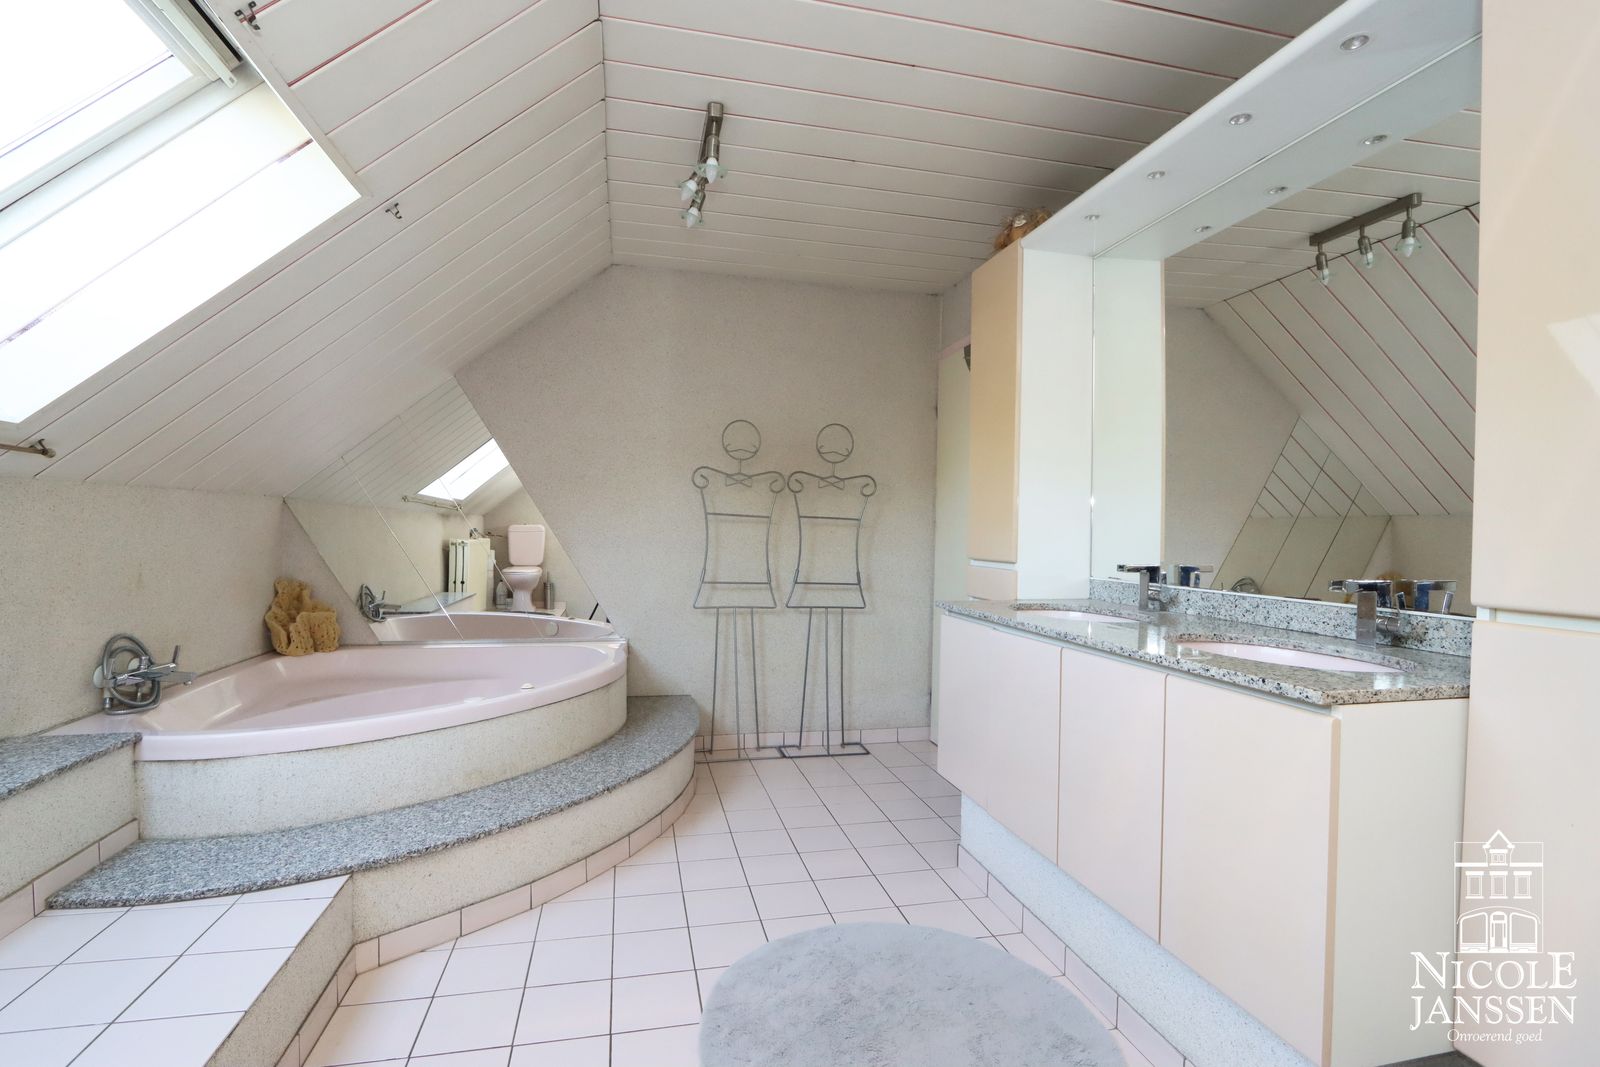 Nicole Janssen - huis te koop - Kleine Dijk 17 te Peer - badkamer.jpg